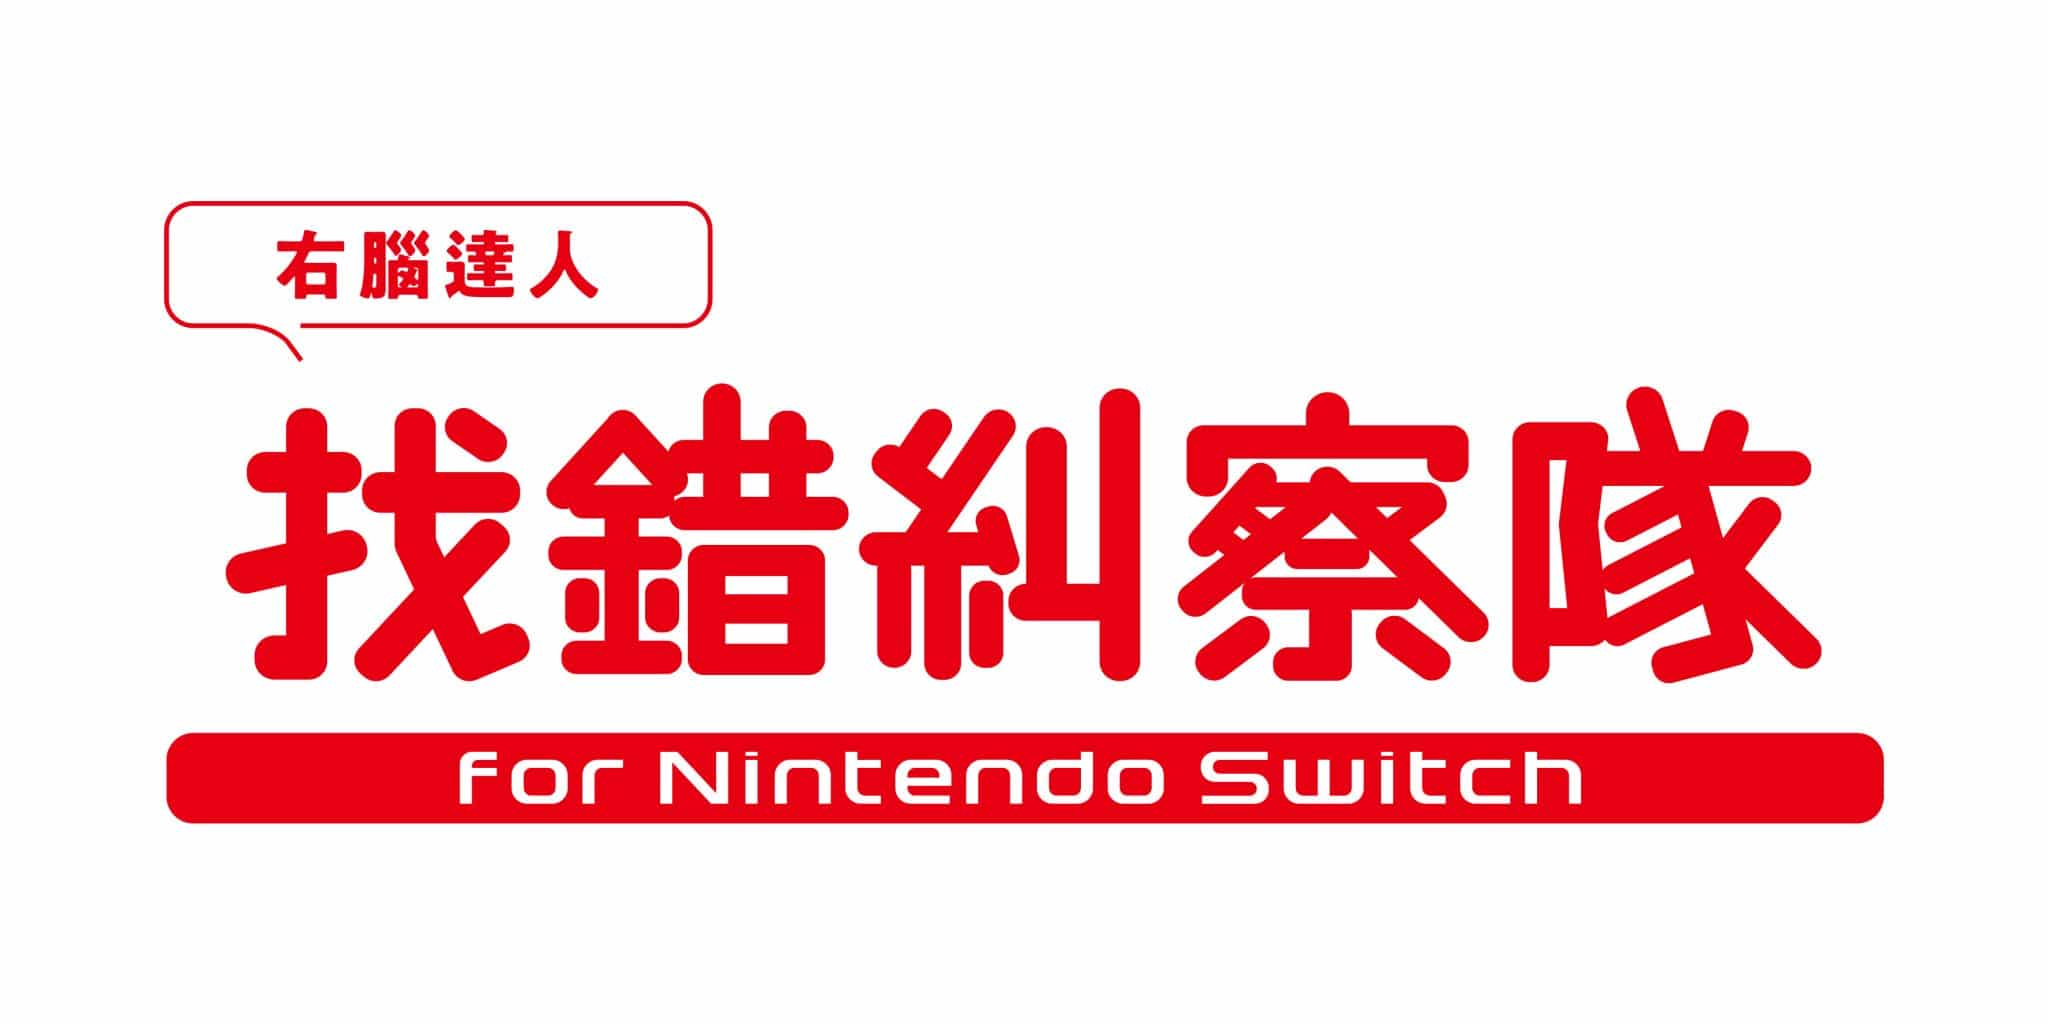 右腦達人 找錯糾察隊 for Nintendo Switch